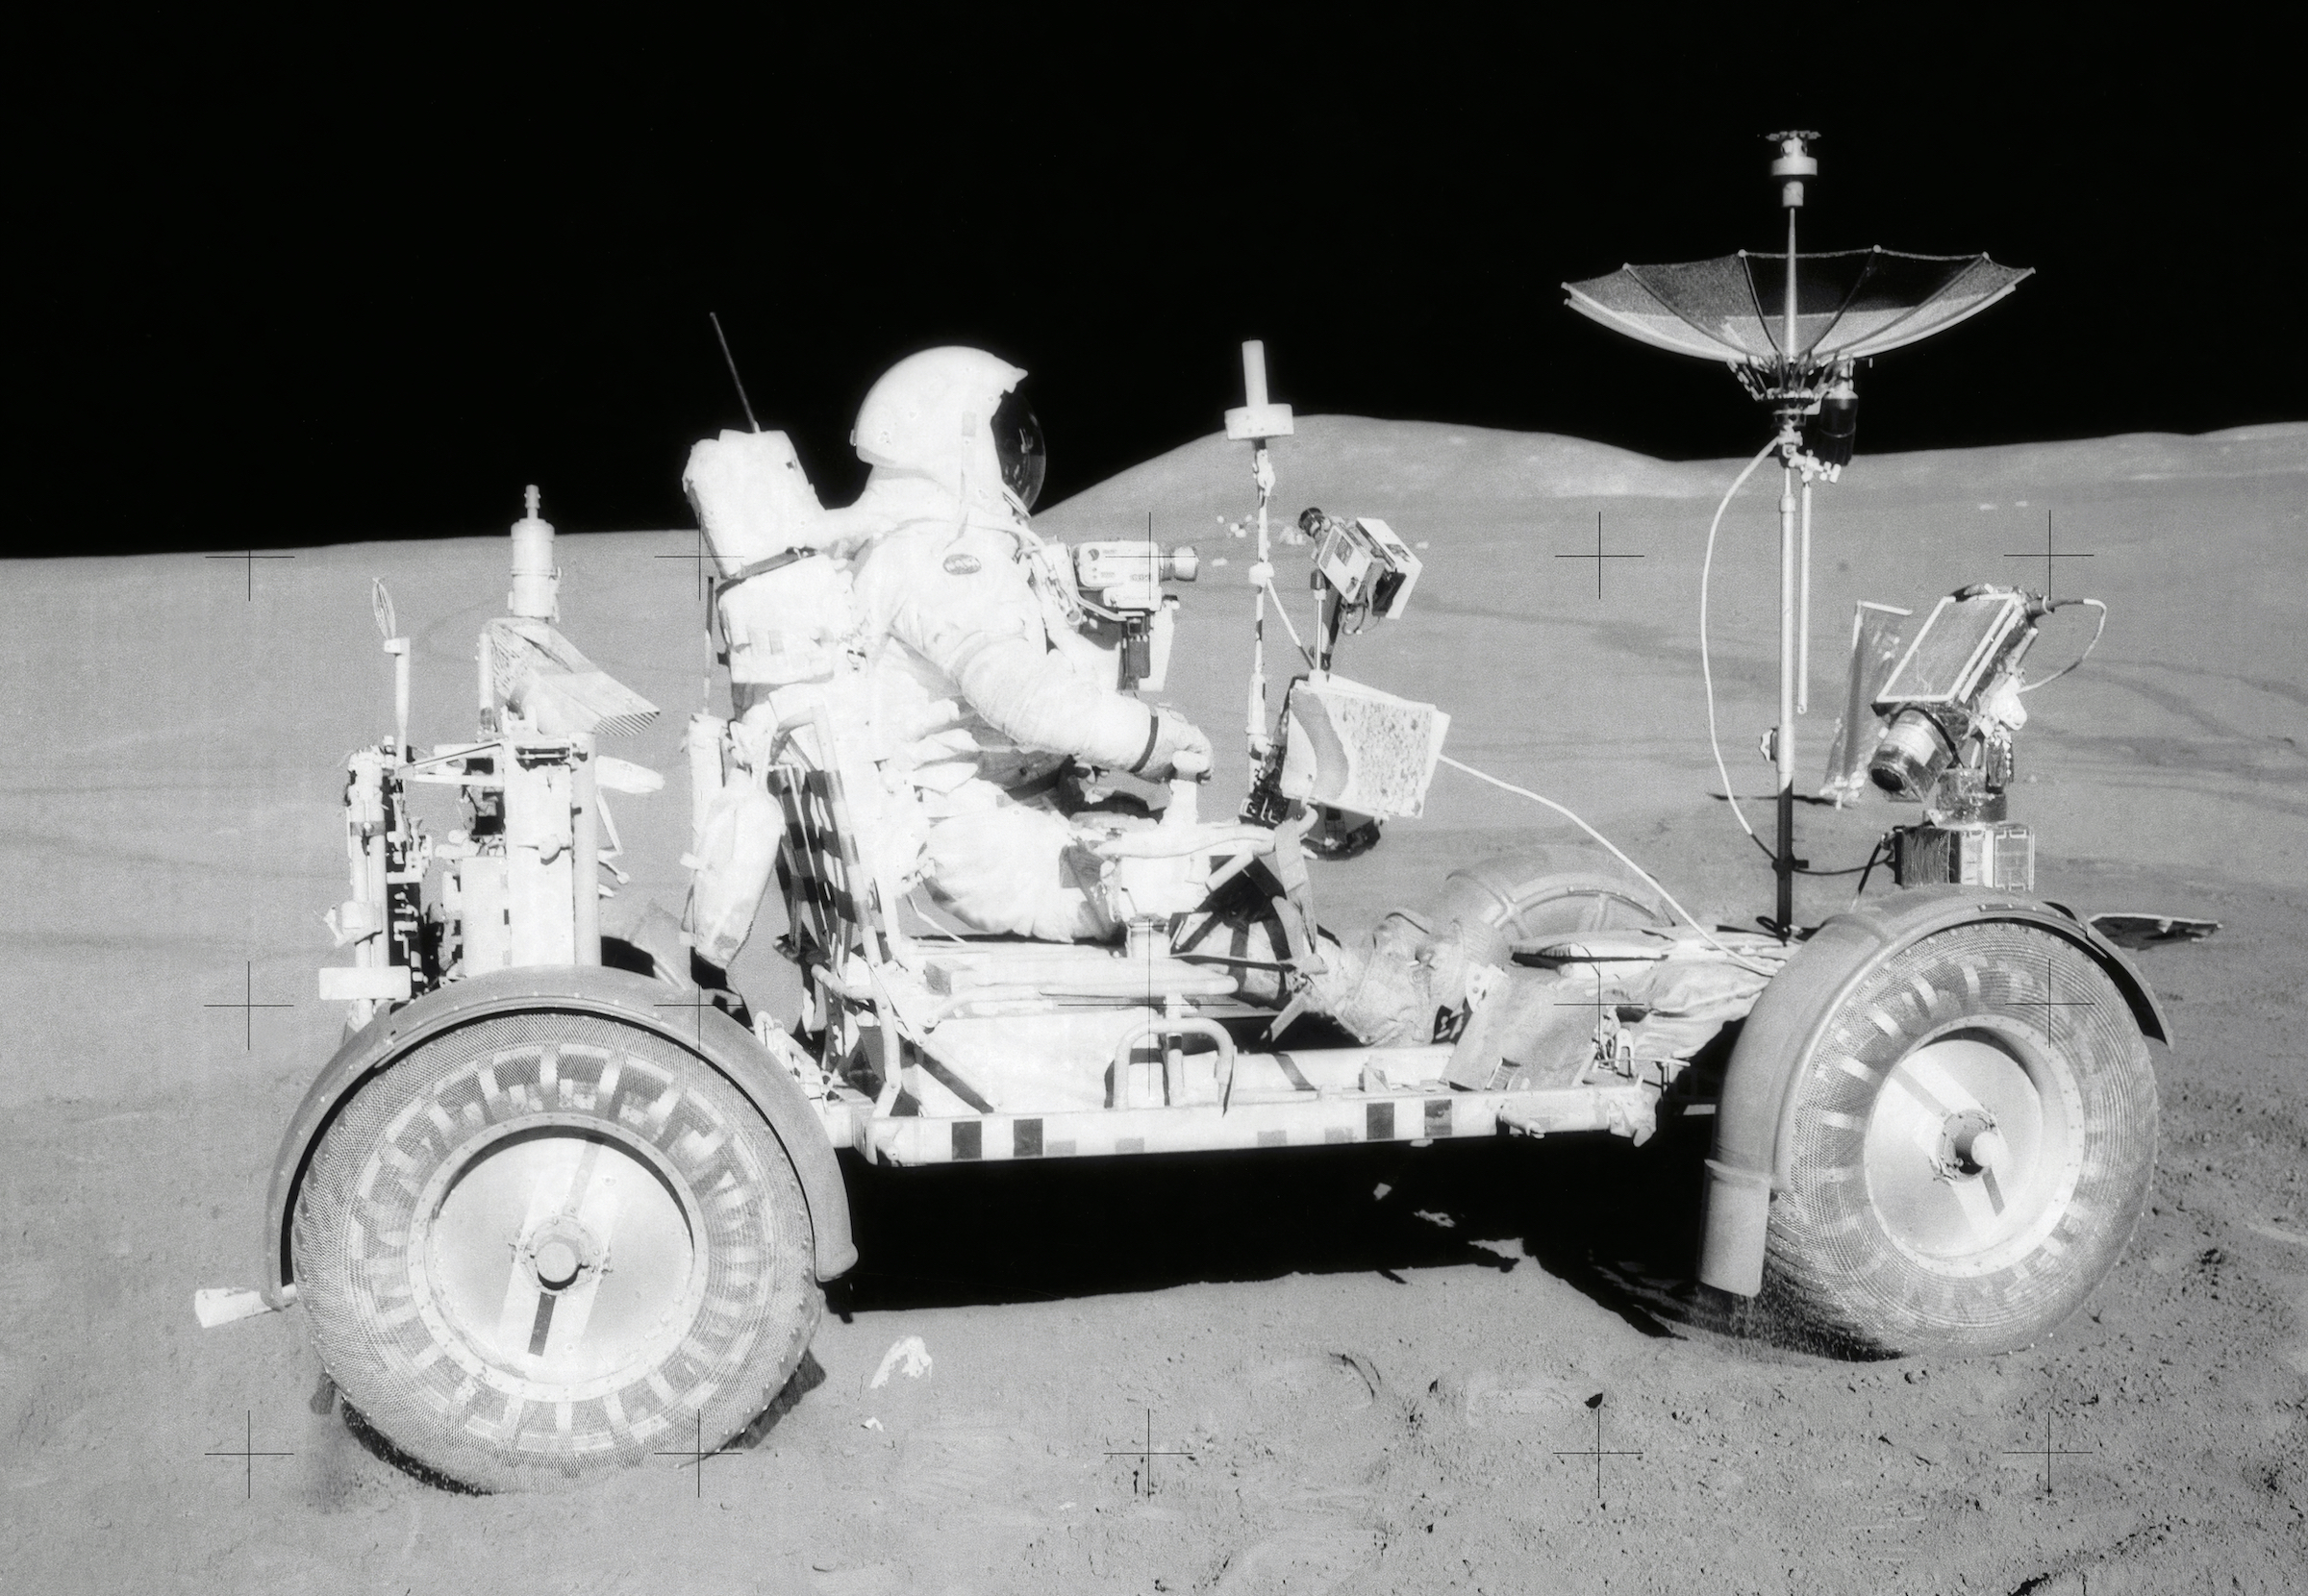 Lunar Roving Vehicle 1971